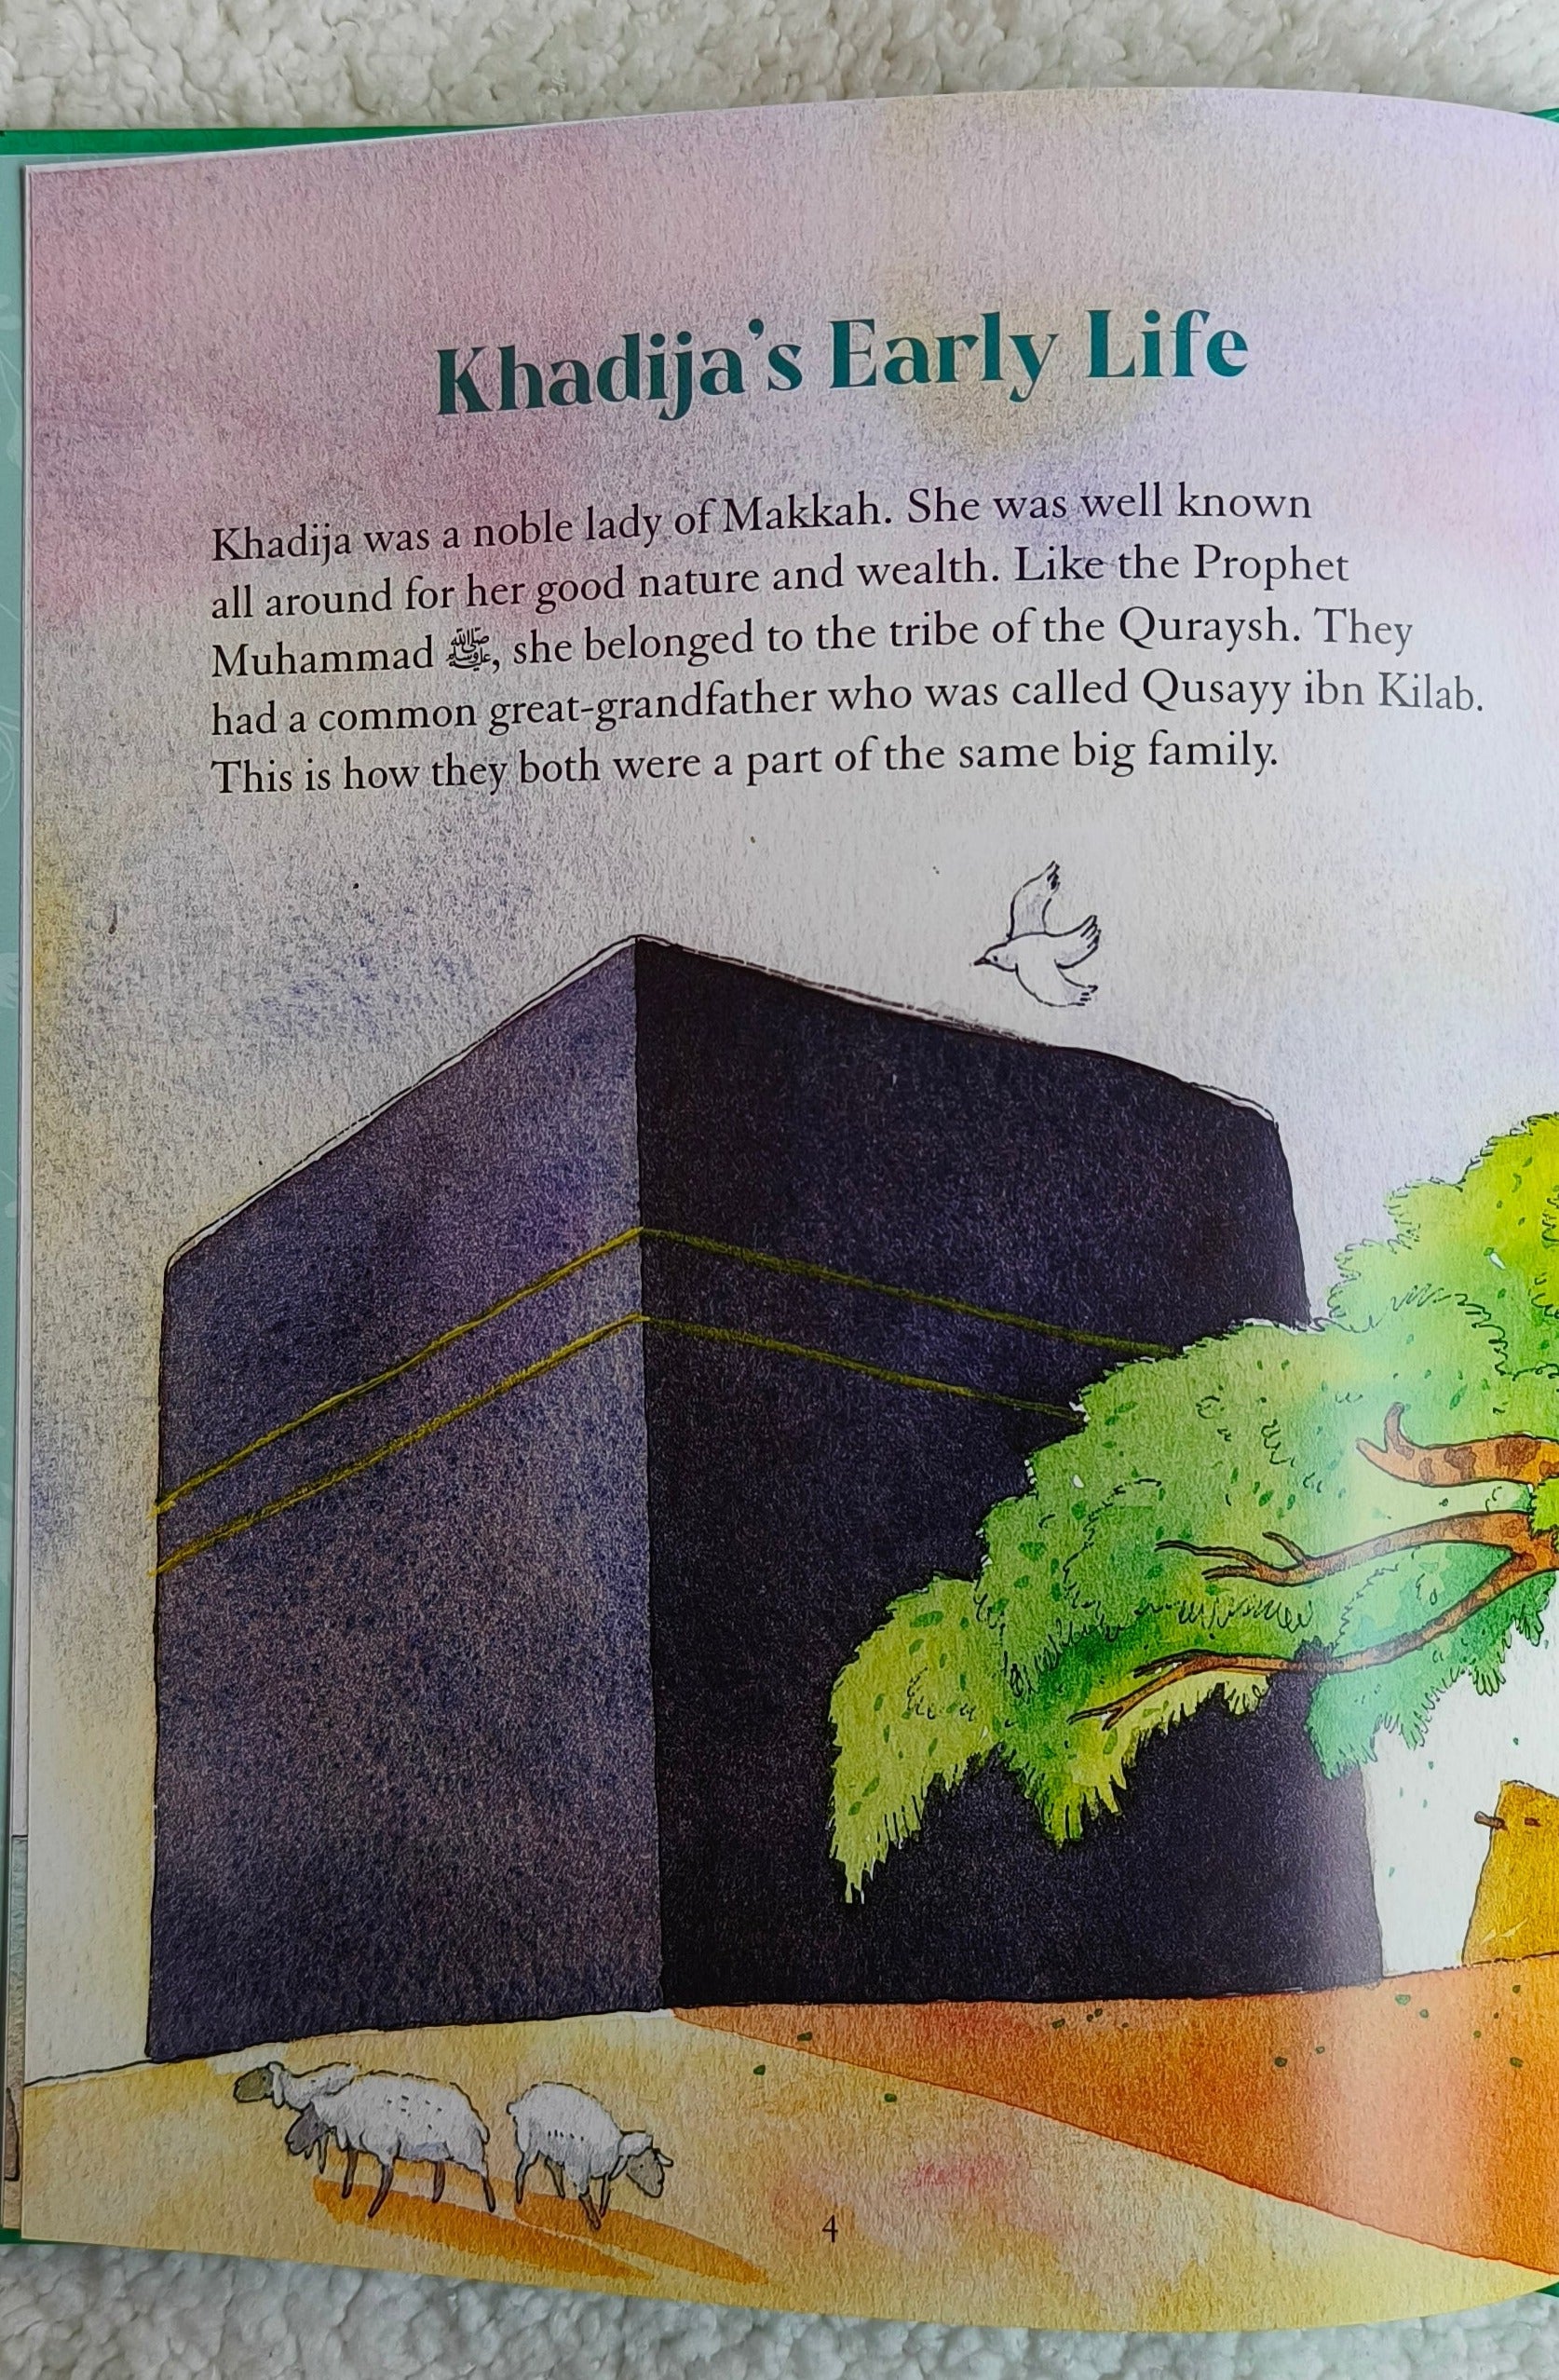 The Story of Khadija - alifthebookstore